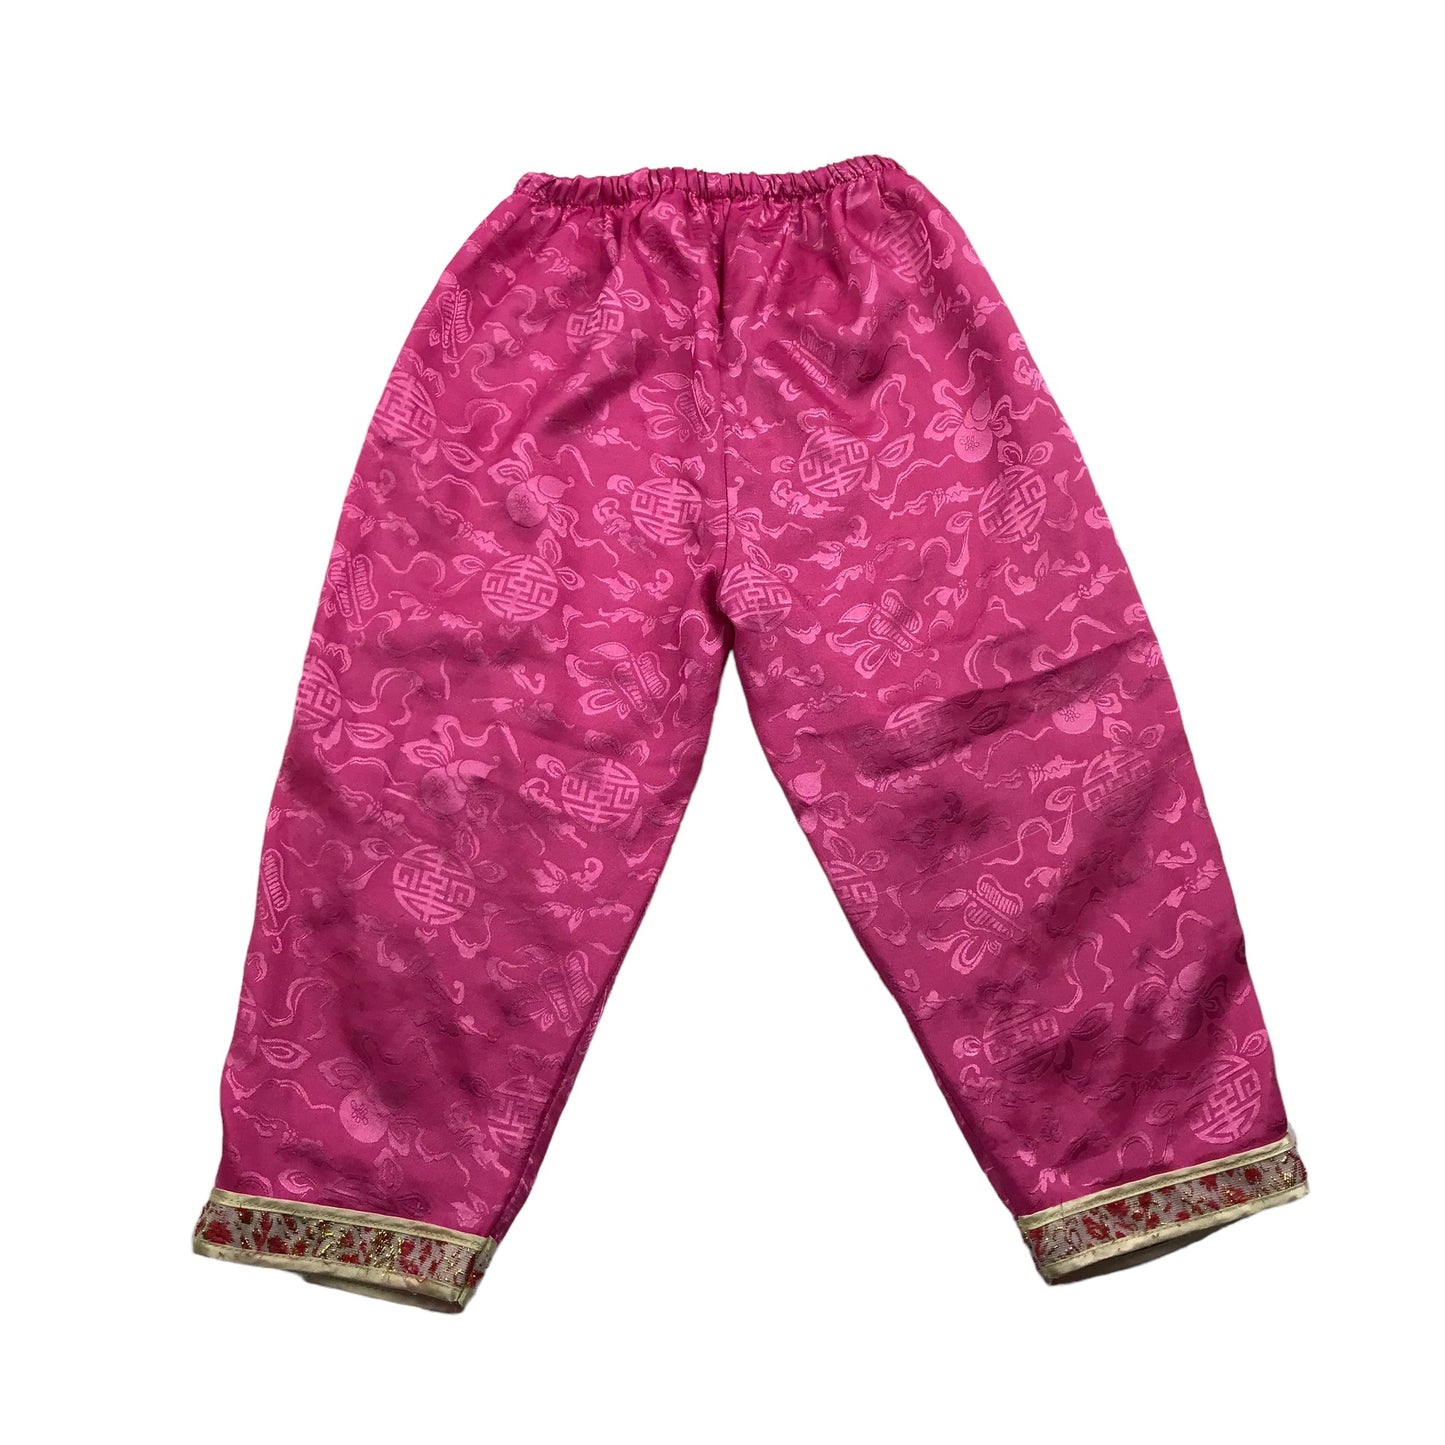 Kuailebaobei Pink Silk-like Blouse and Trousers Age 5